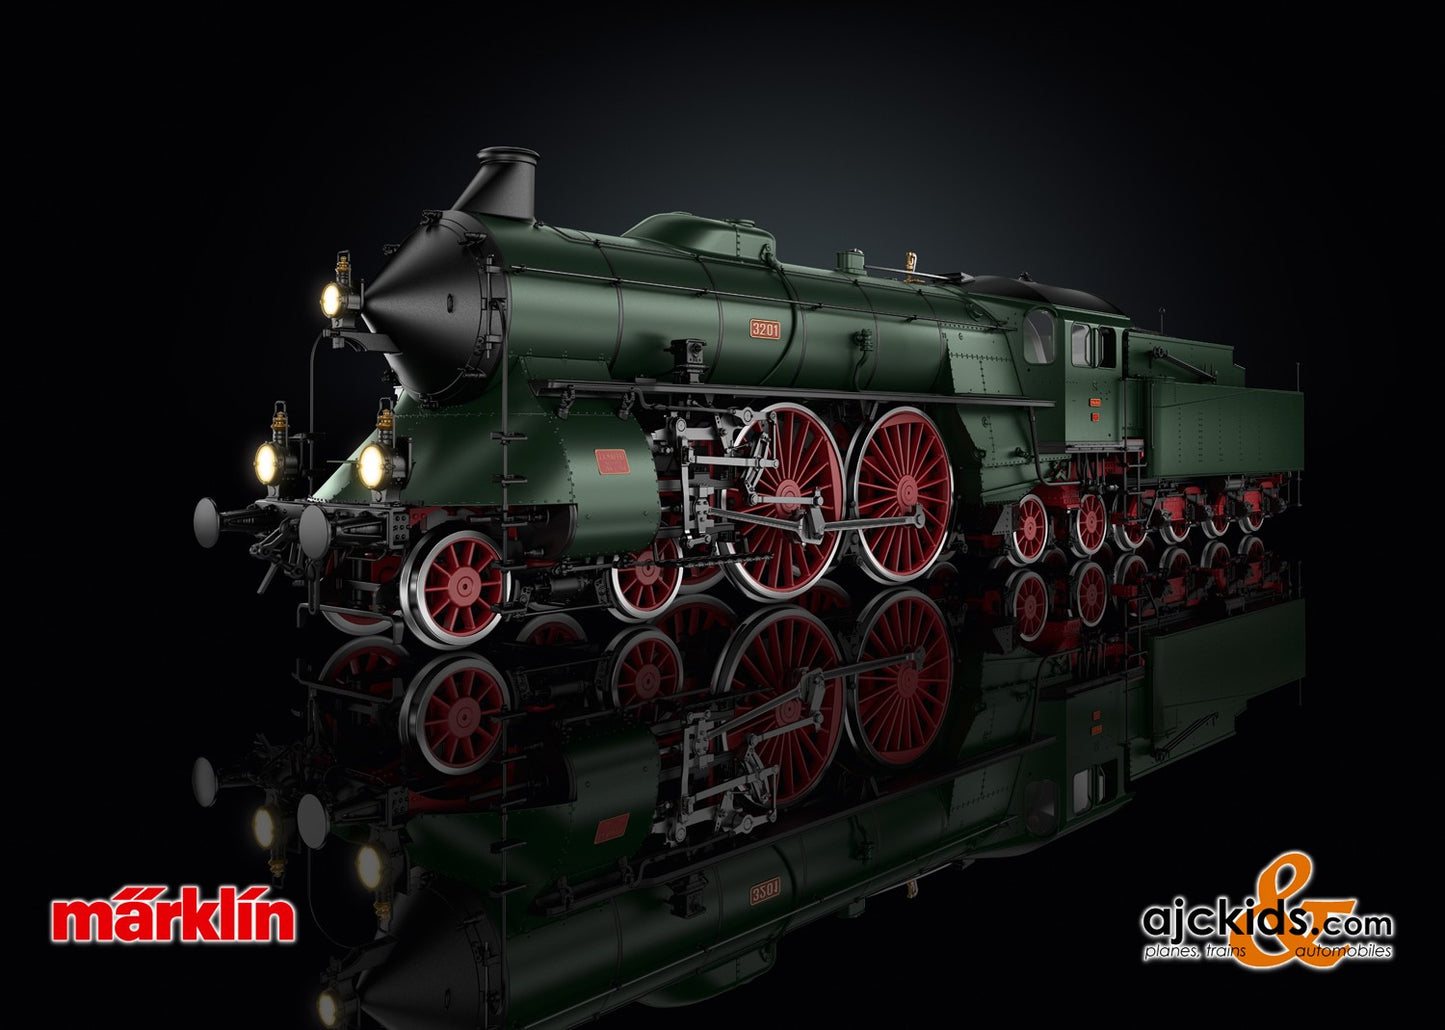 Marklin 55160 - Class S 2/6 "Museum" Steam Locomotive, EAN 4001883551609 at Ajckids.com